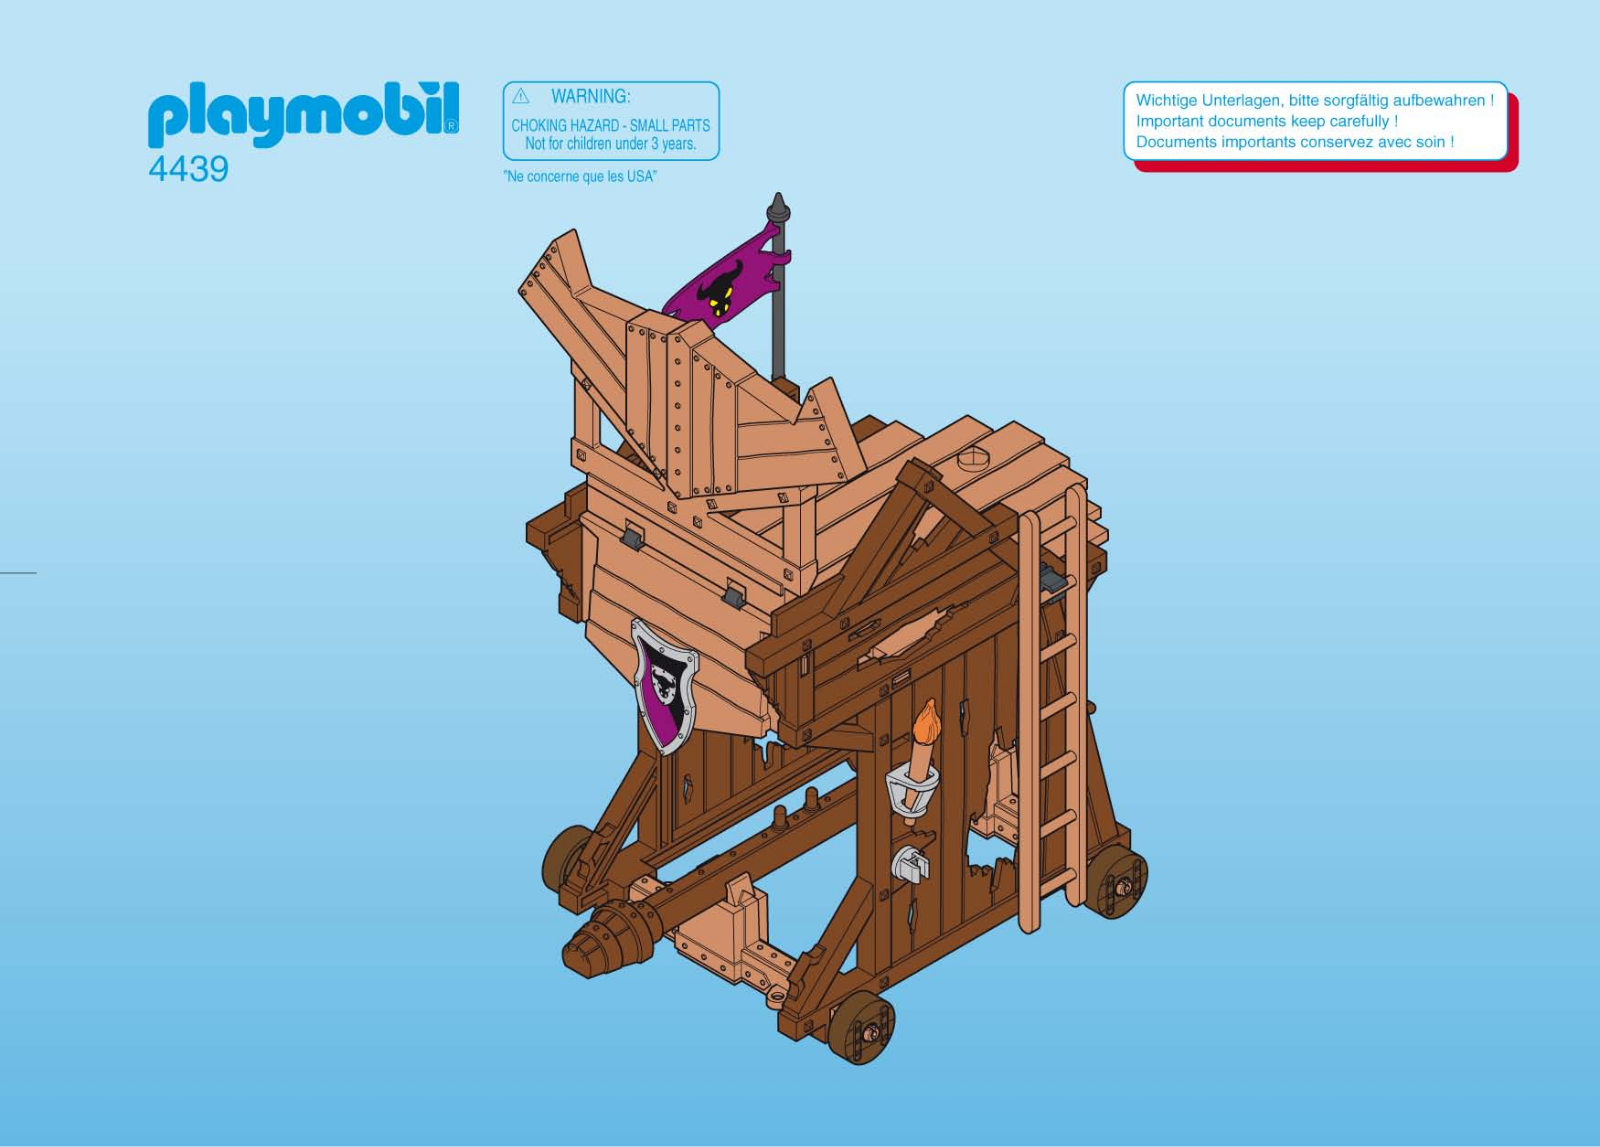 Playmobil 4439 Instructions